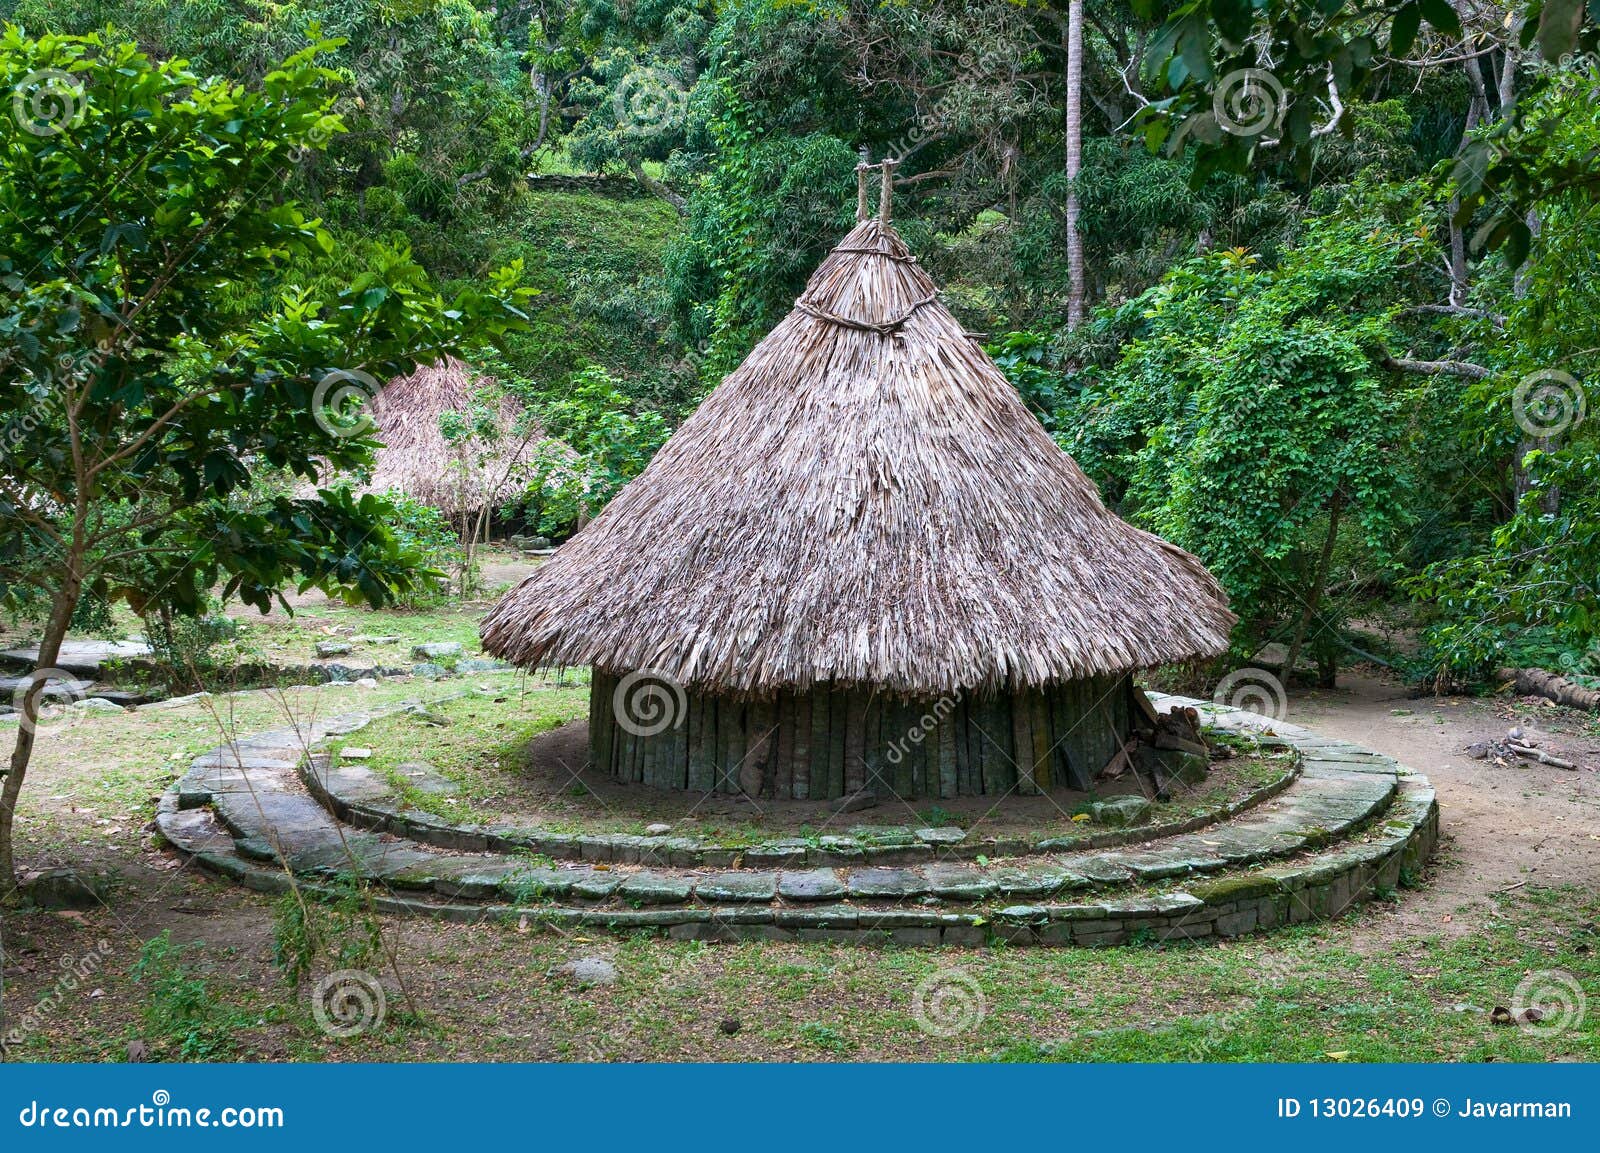 pueblito archaeologic site, tayrona national park